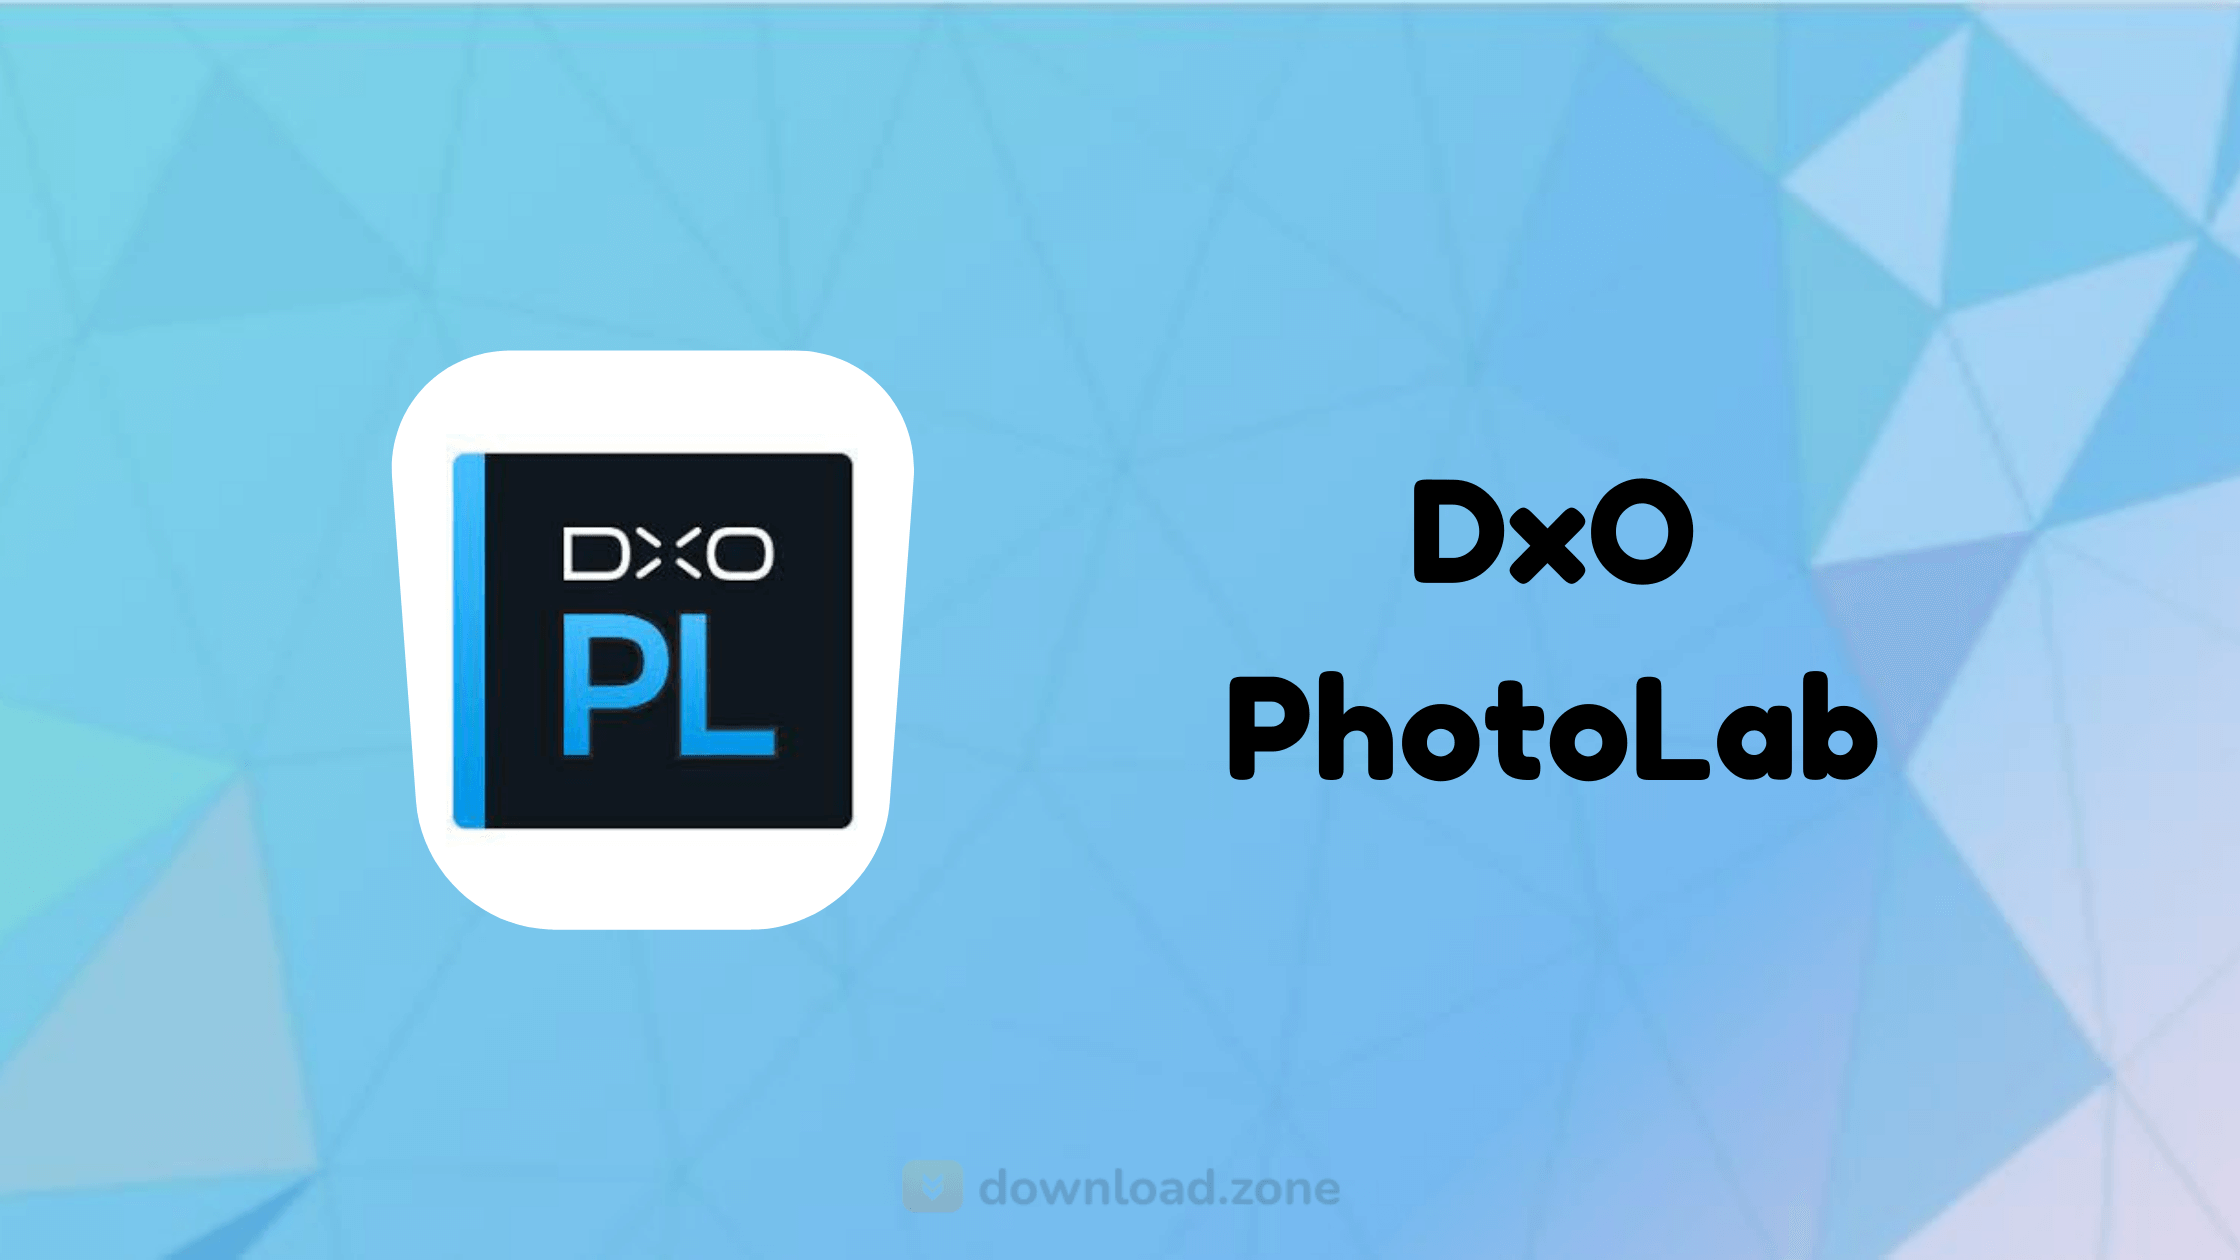 DxO PhotoLab 7.0.2.83 instal the new